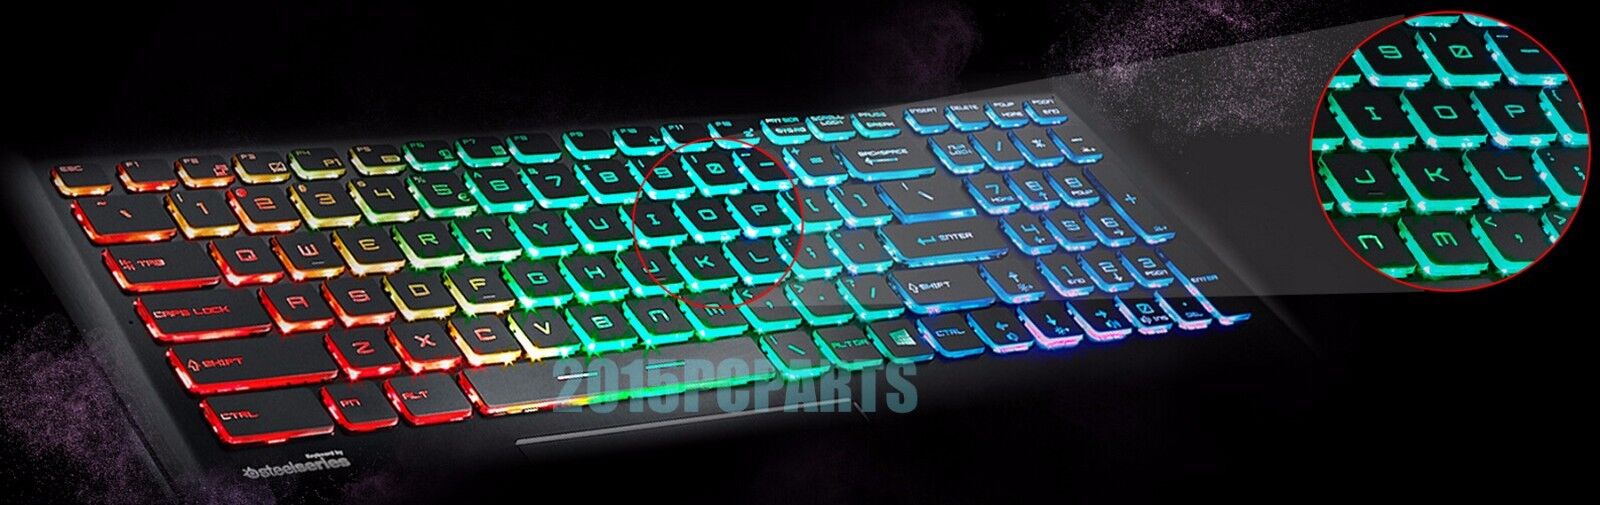 New MSI GT72VR 6RD 6RE 7RE Dominator Pro Full RGB Backlit Keyboard Crystal US